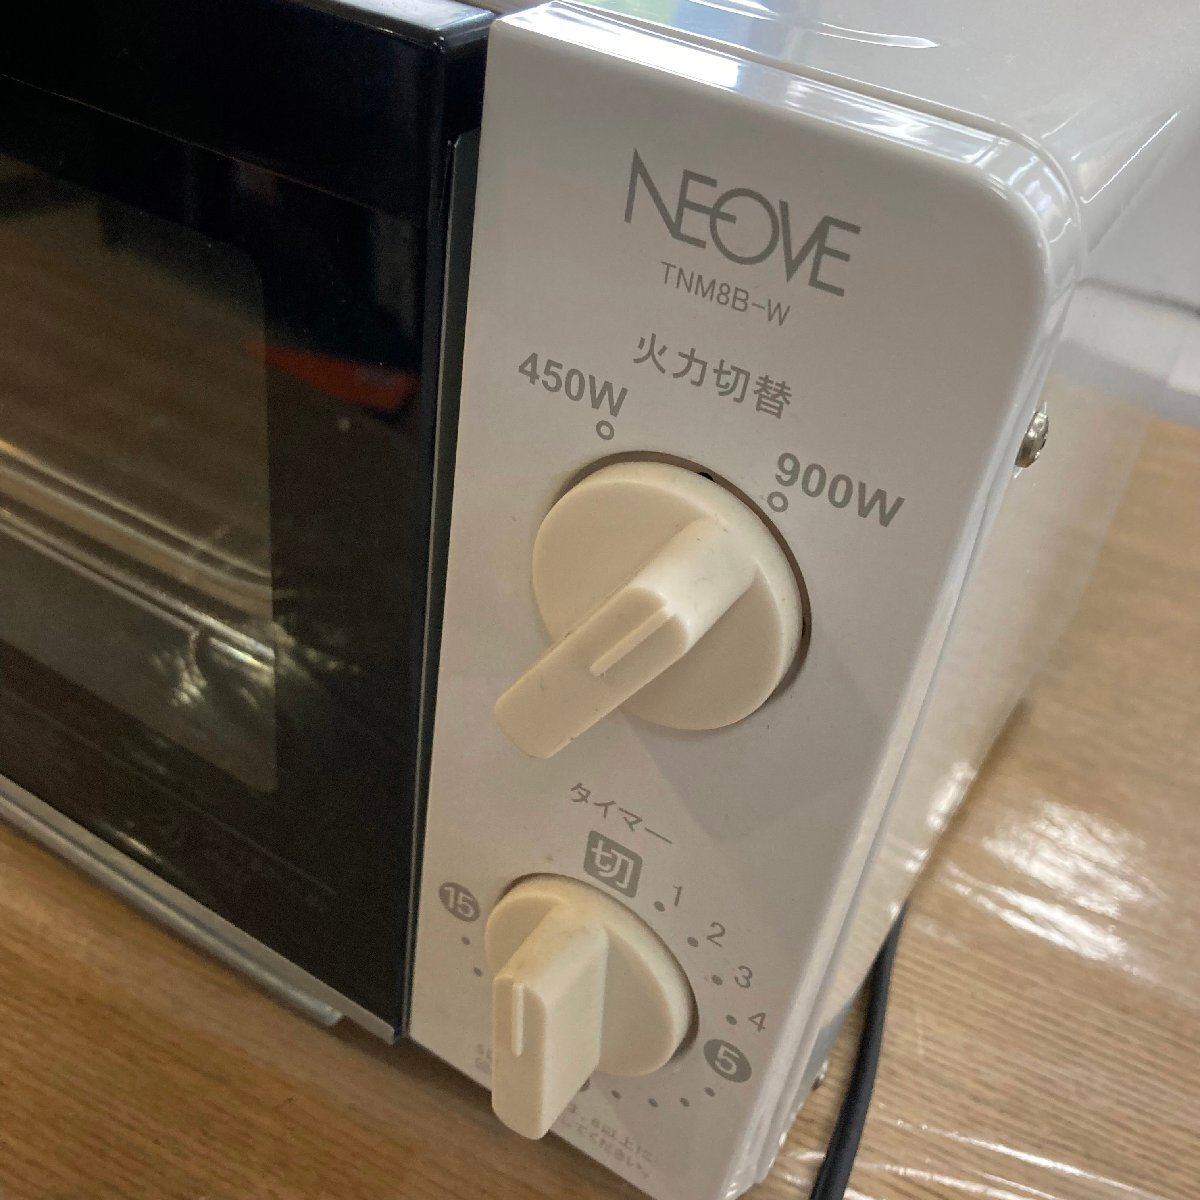  б/у *NEOVE* печь тостер TNM8B-W 2017 год производства белый 